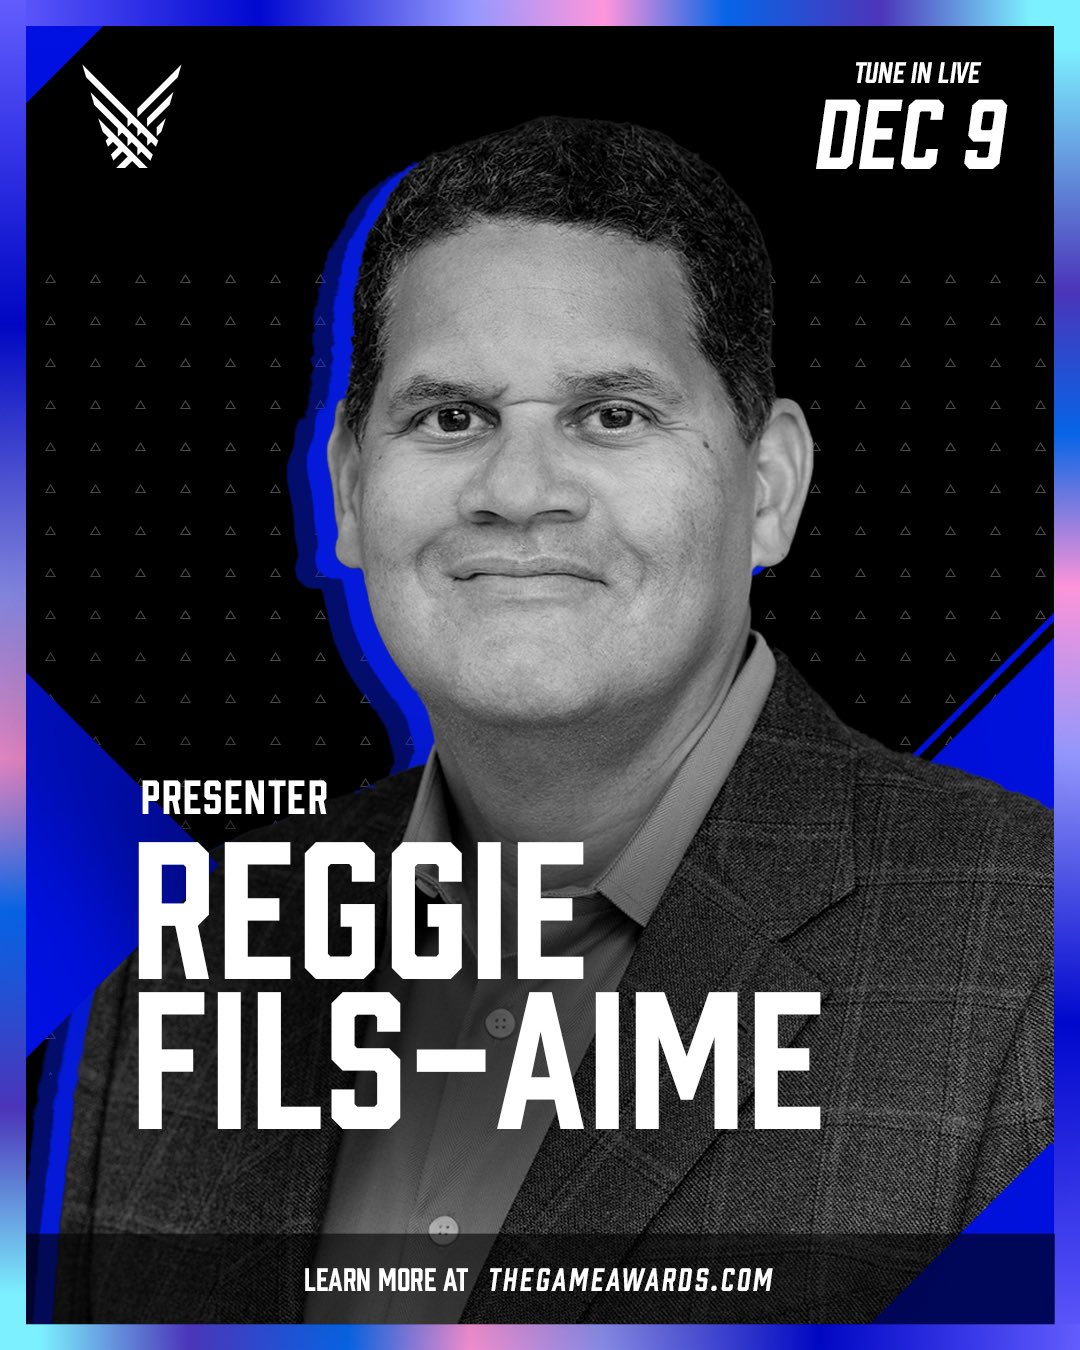 FFneyyLVEAUk CO | Nintendo | Reggie Fils-Aime อดีตประธาน Nintendo อเมริกาจะมาปรากฎตัวในงาน The Game Awards 2021